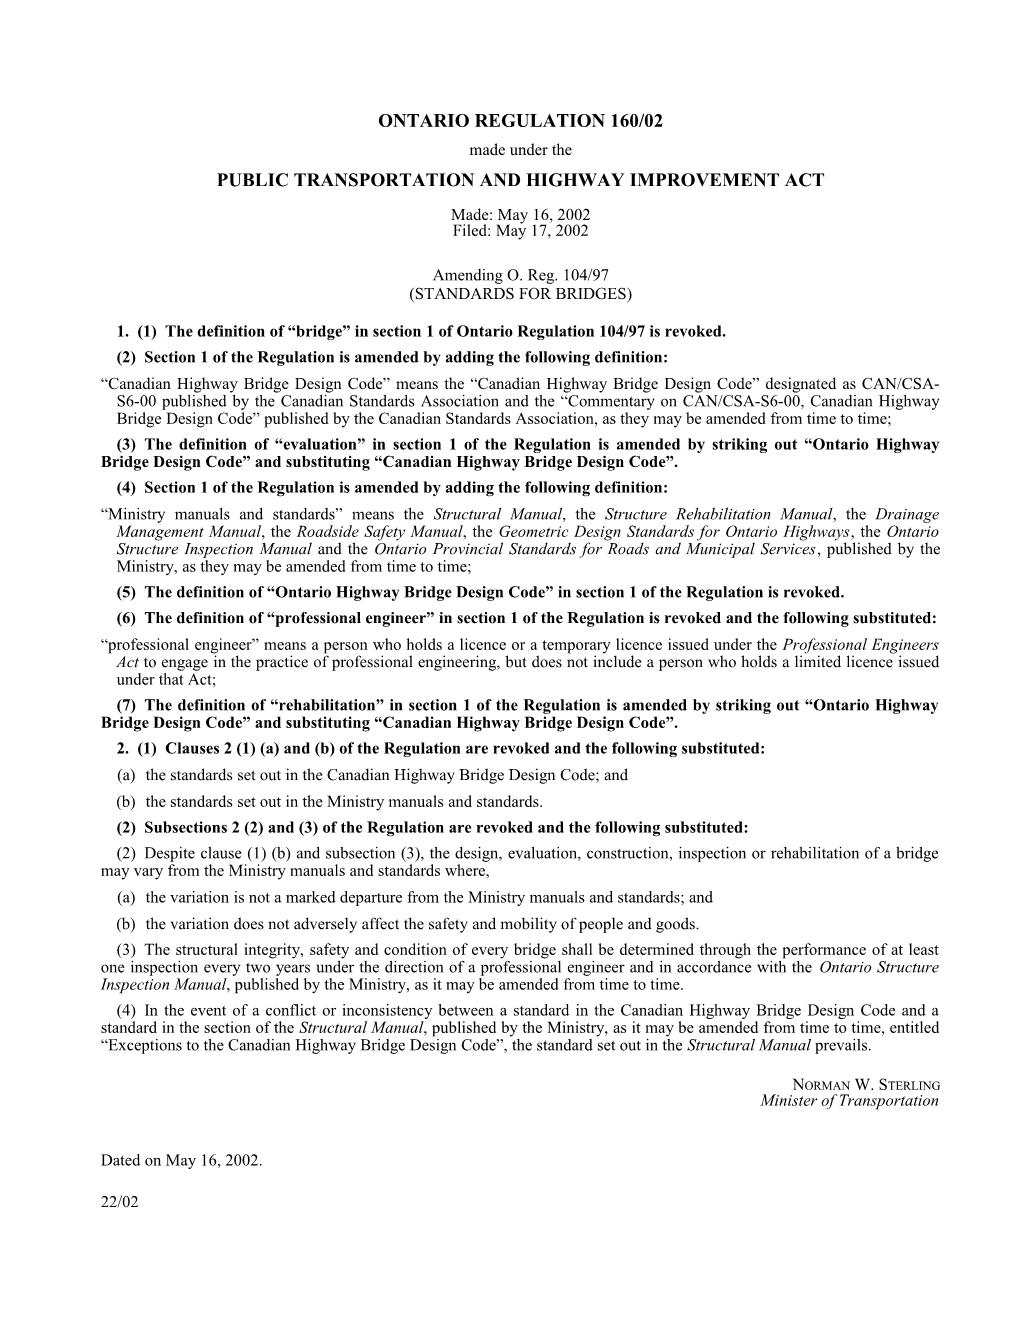 PUBLIC TRANSPORTATION and HIGHWAY IMPROVEMENT ACT - O. Reg. 160/02